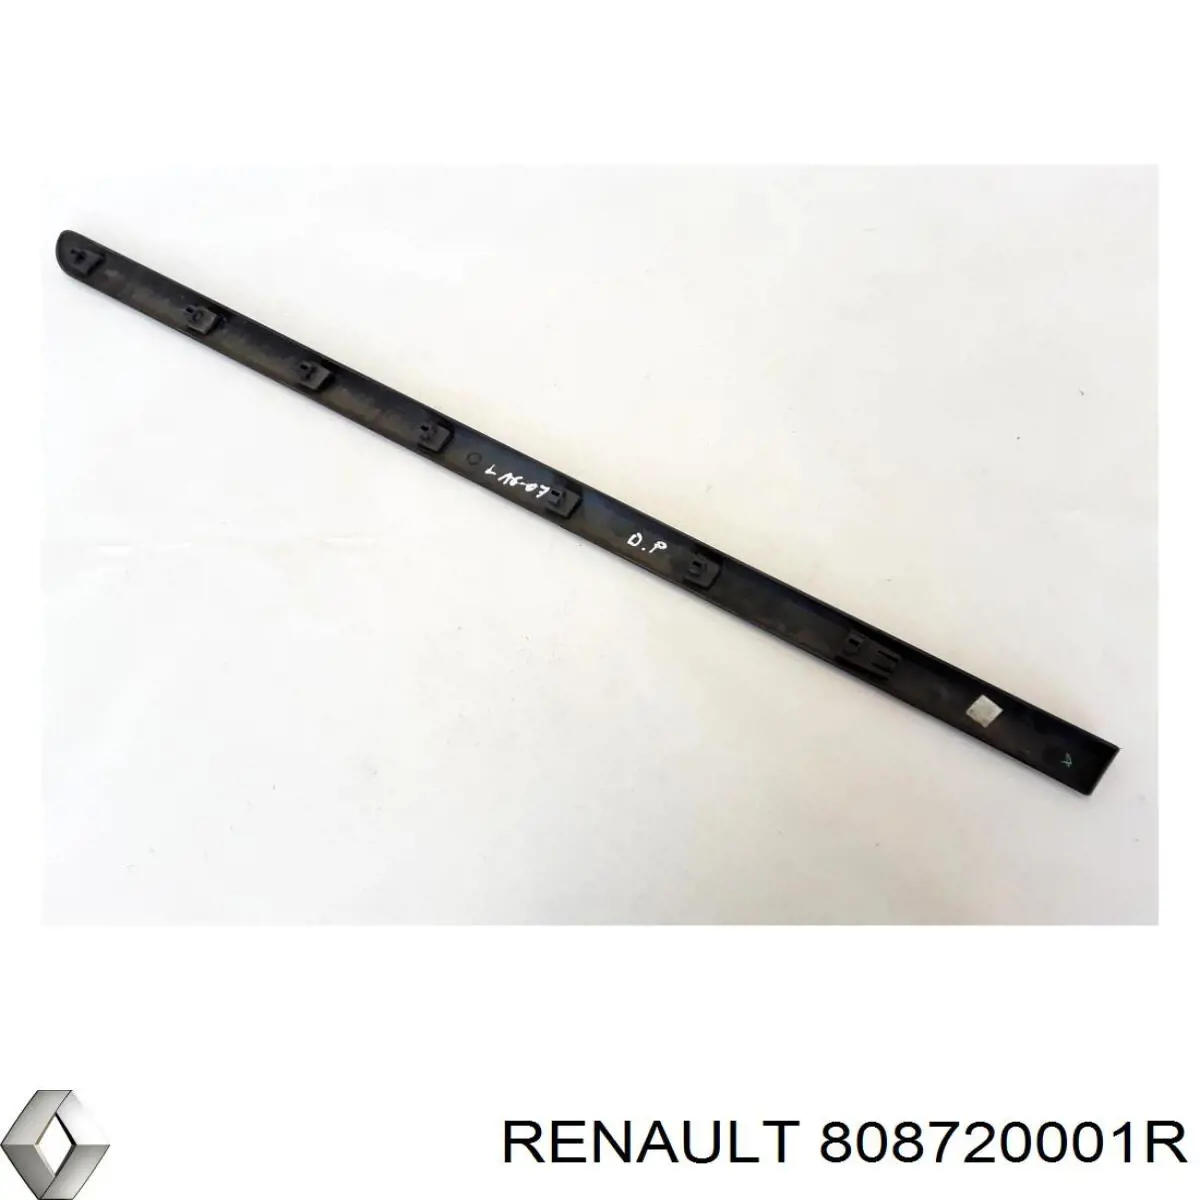 808720001R Renault (RVI) moldura de la puerta delantera derecha